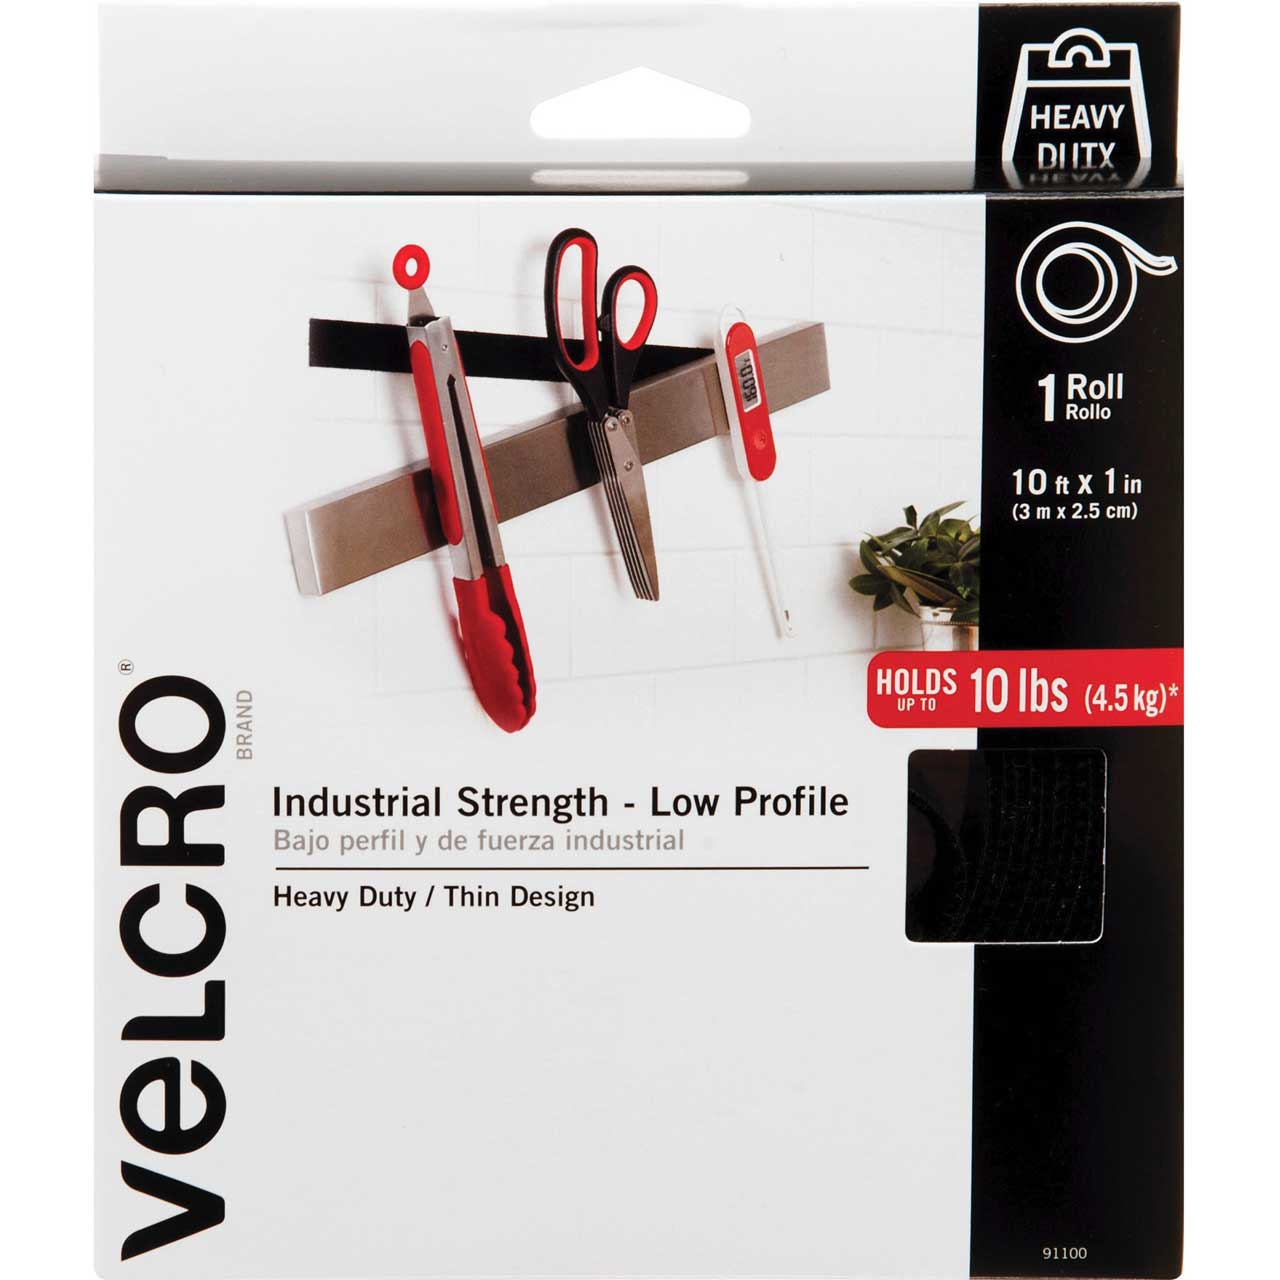 VELCRO Brand Industrial Strength Heavy-Duty Fasteners, 2 x 25 ft, Black